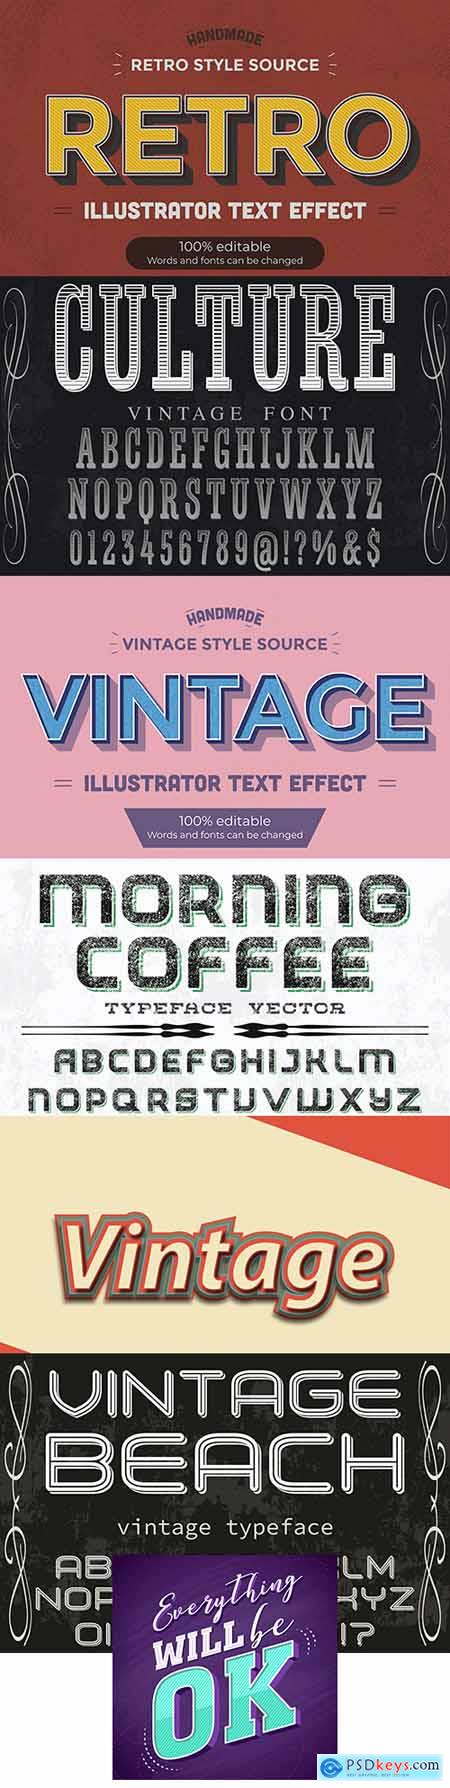 Vintage font editable effect collection illustration